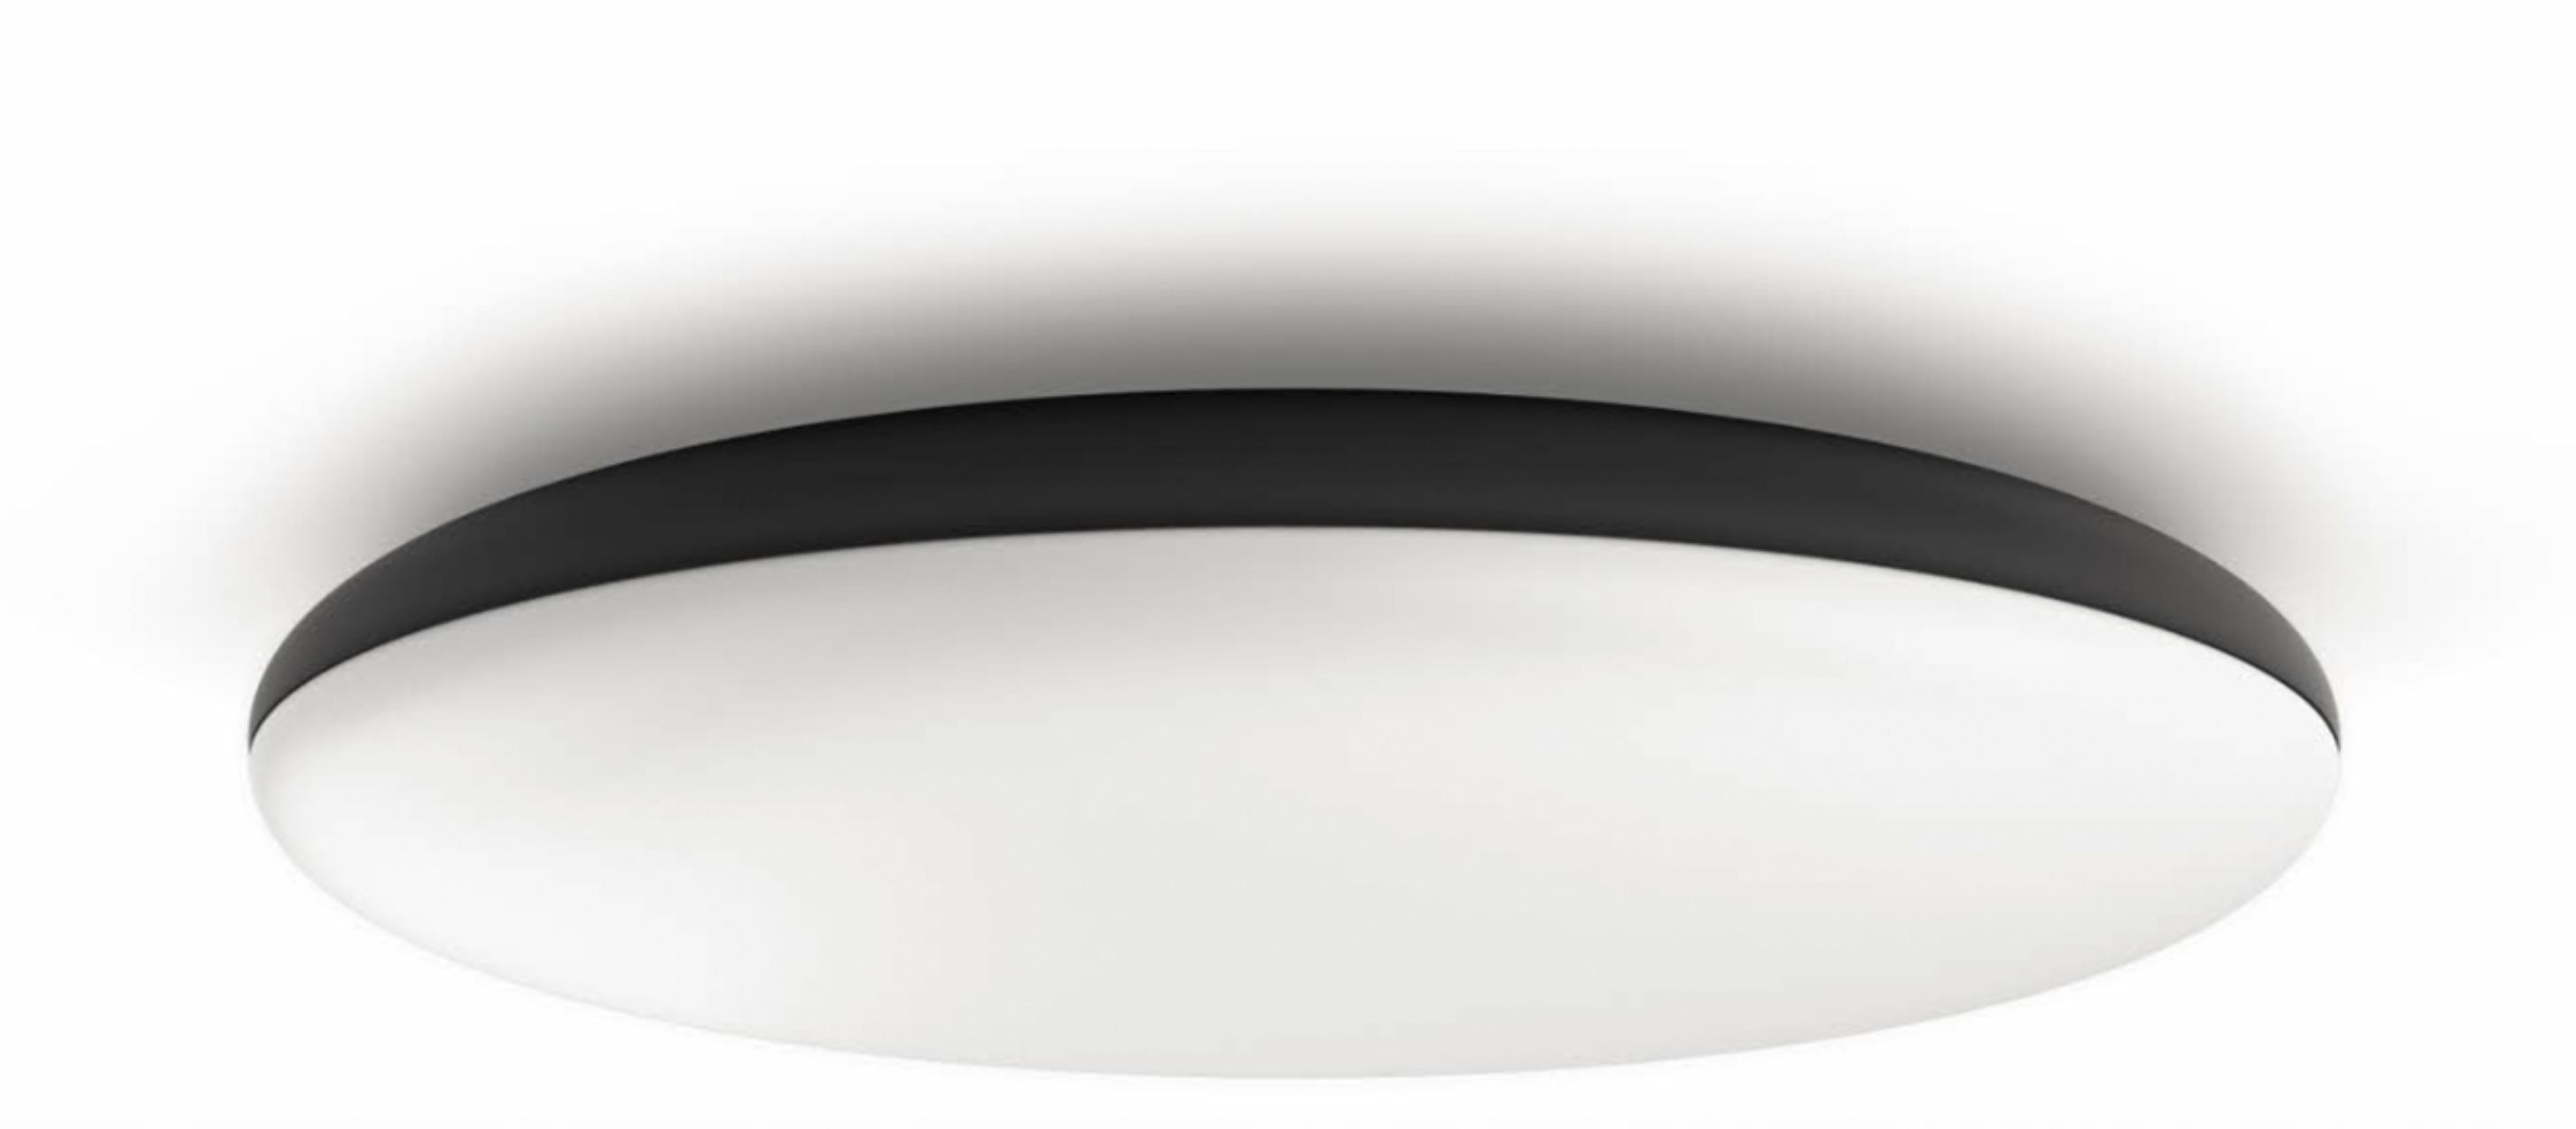 Left View: Philips - Hue White Ambiance Inara Filament Wall Lantern - Black